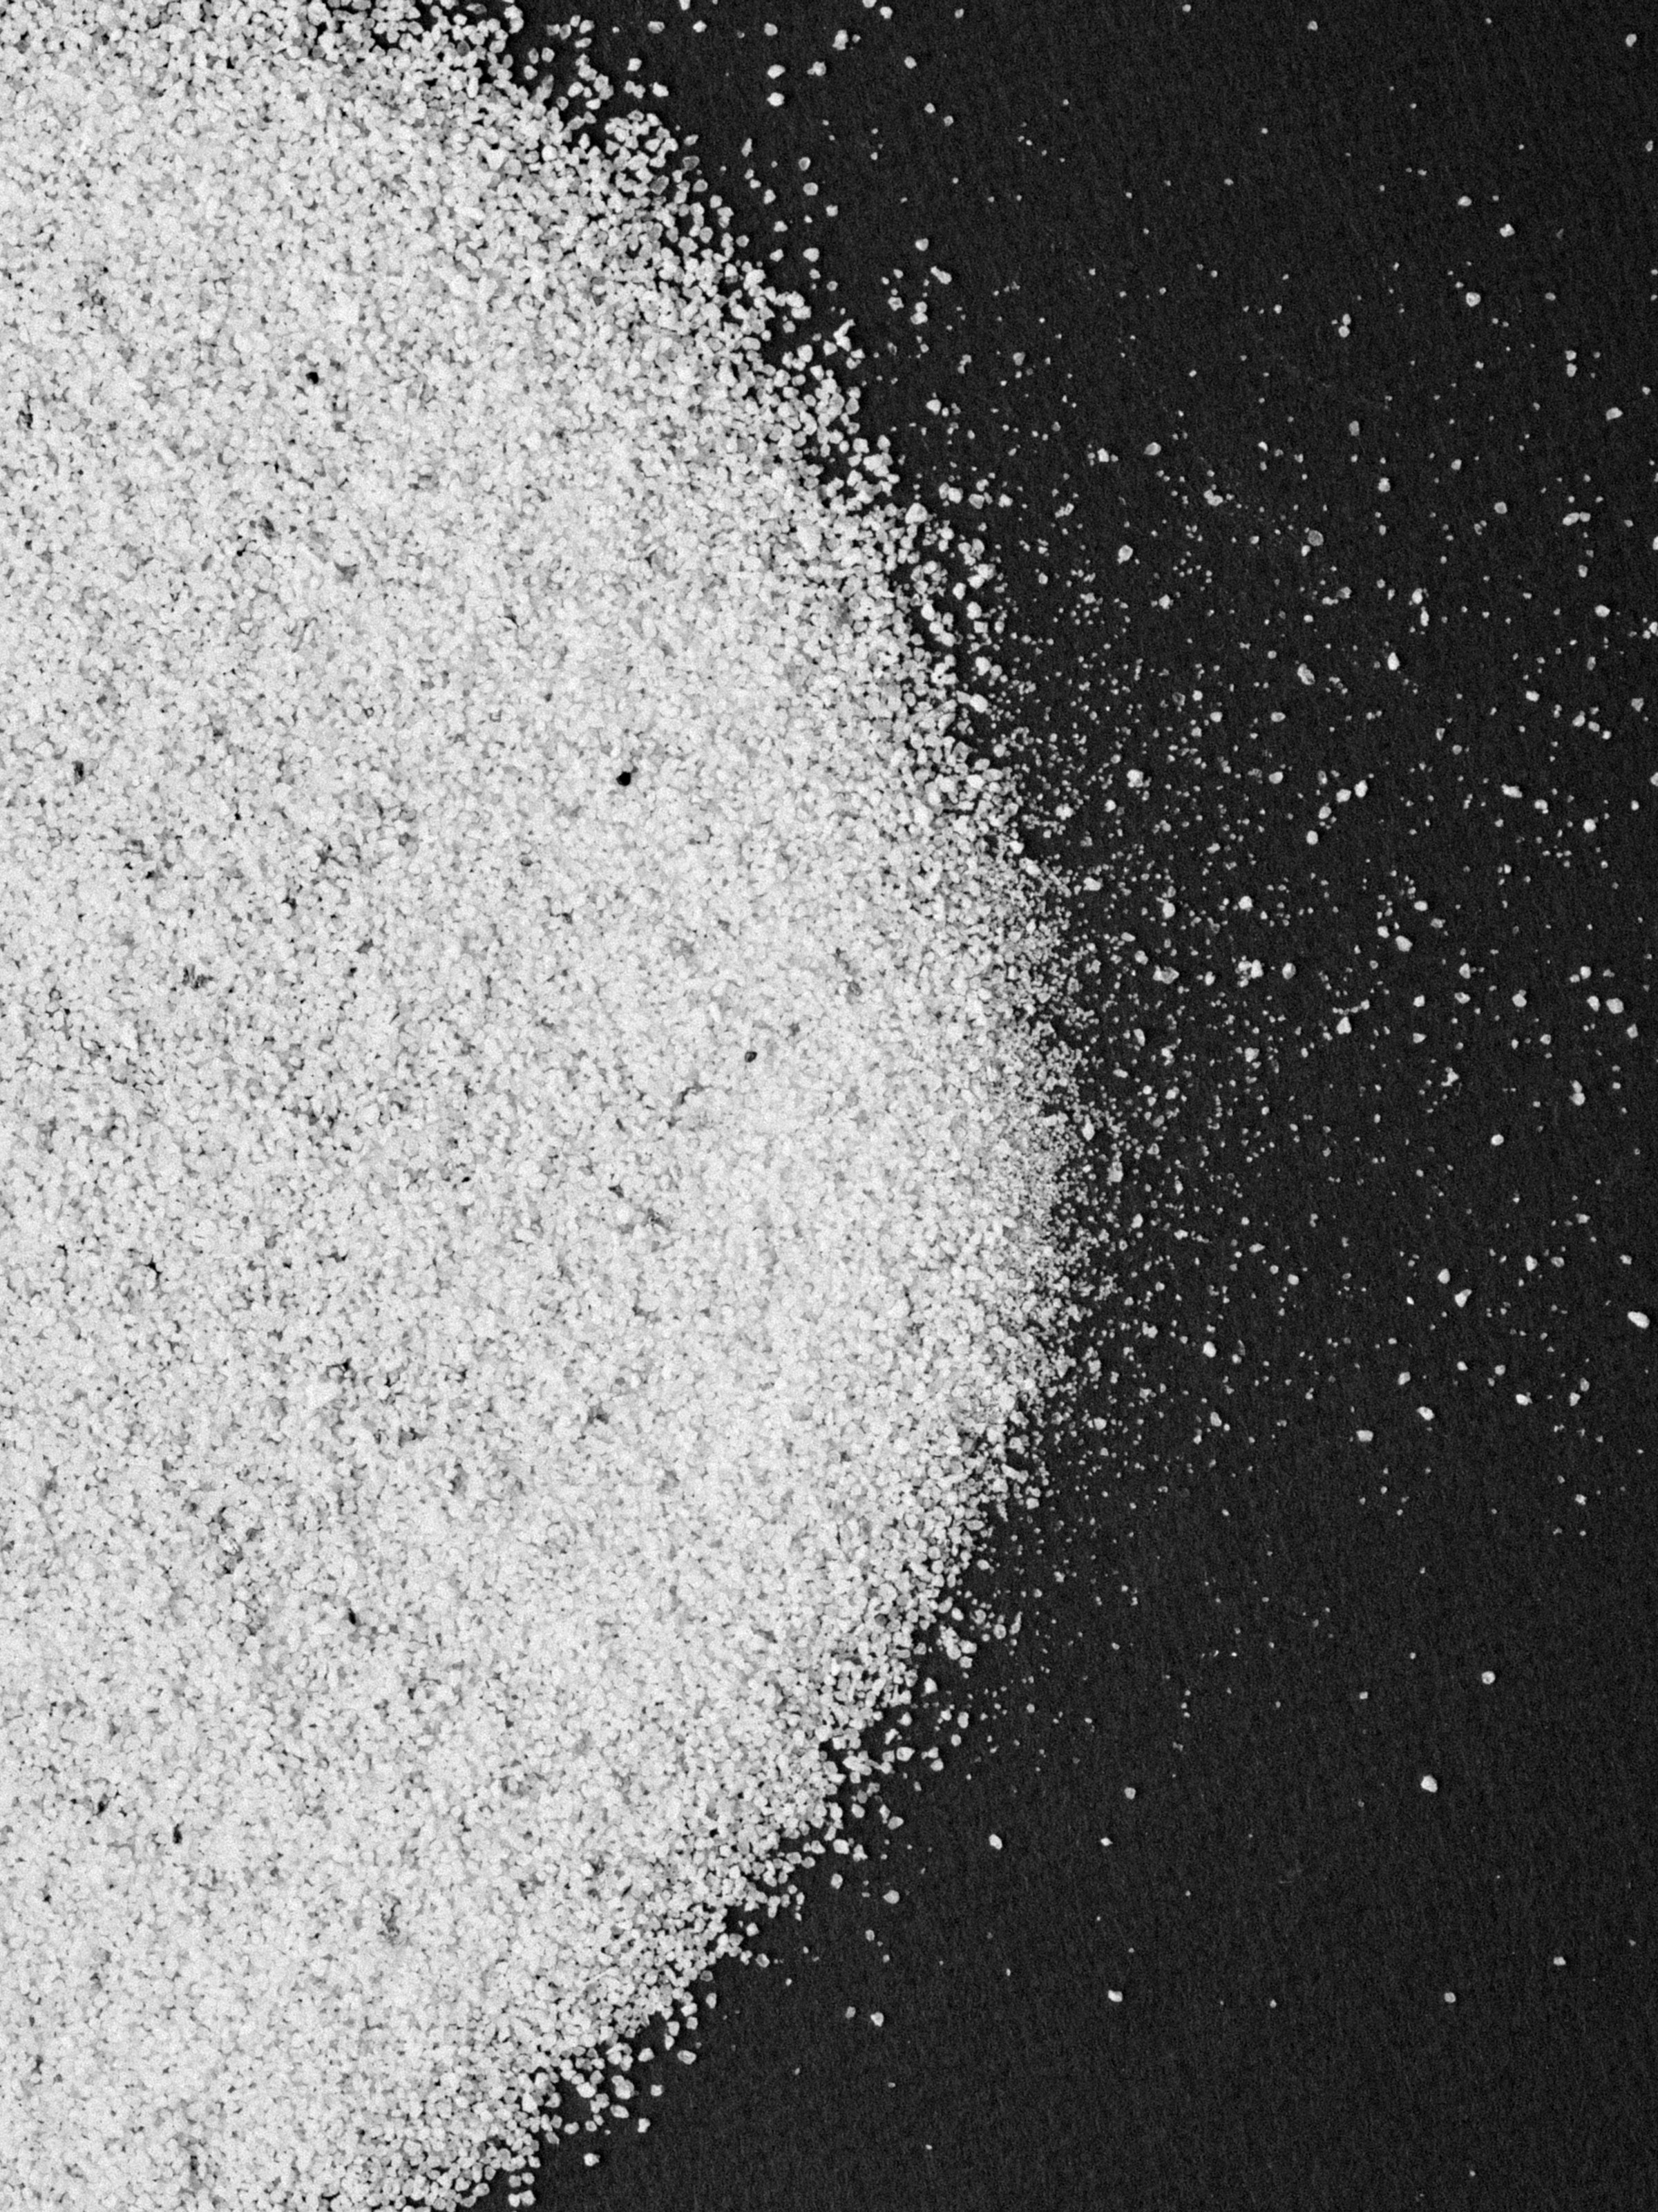 White powder on a black surface | Source: Unsplash